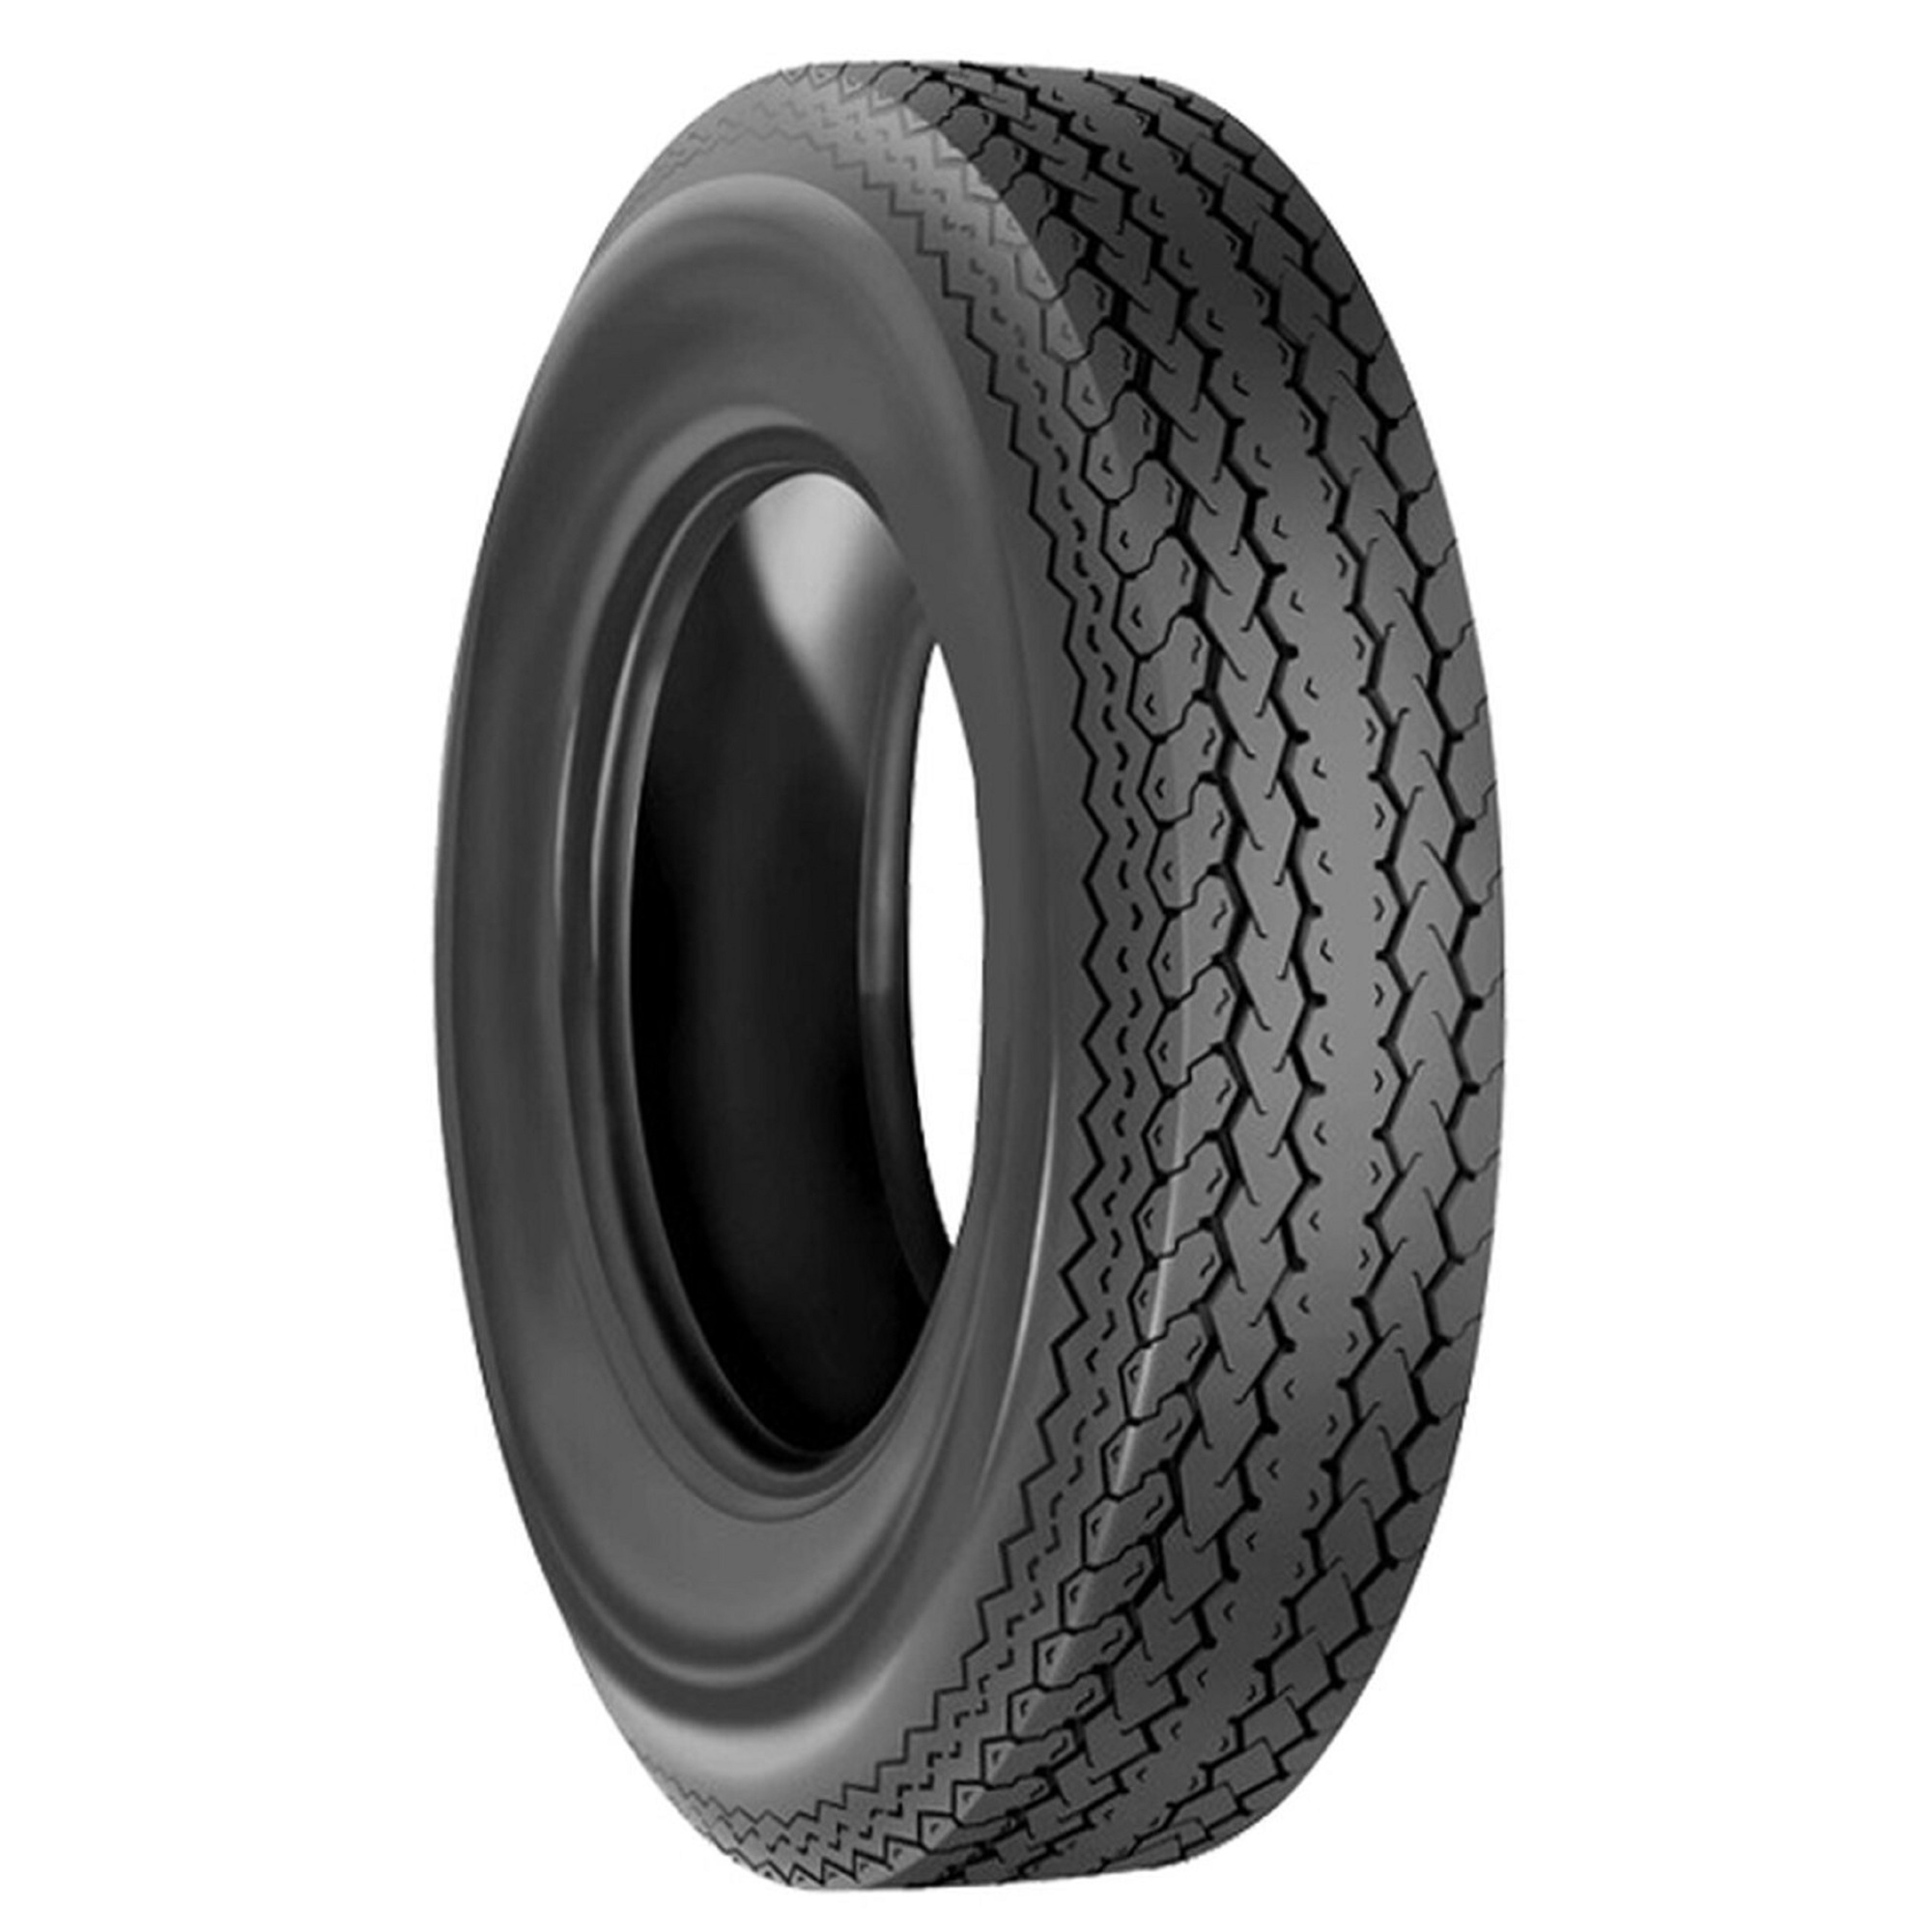 HI-RUN, Highway Trailer Tire, Bias-ply, Tire Size ST165/80D13 Load Range Rating C, Model WD1099